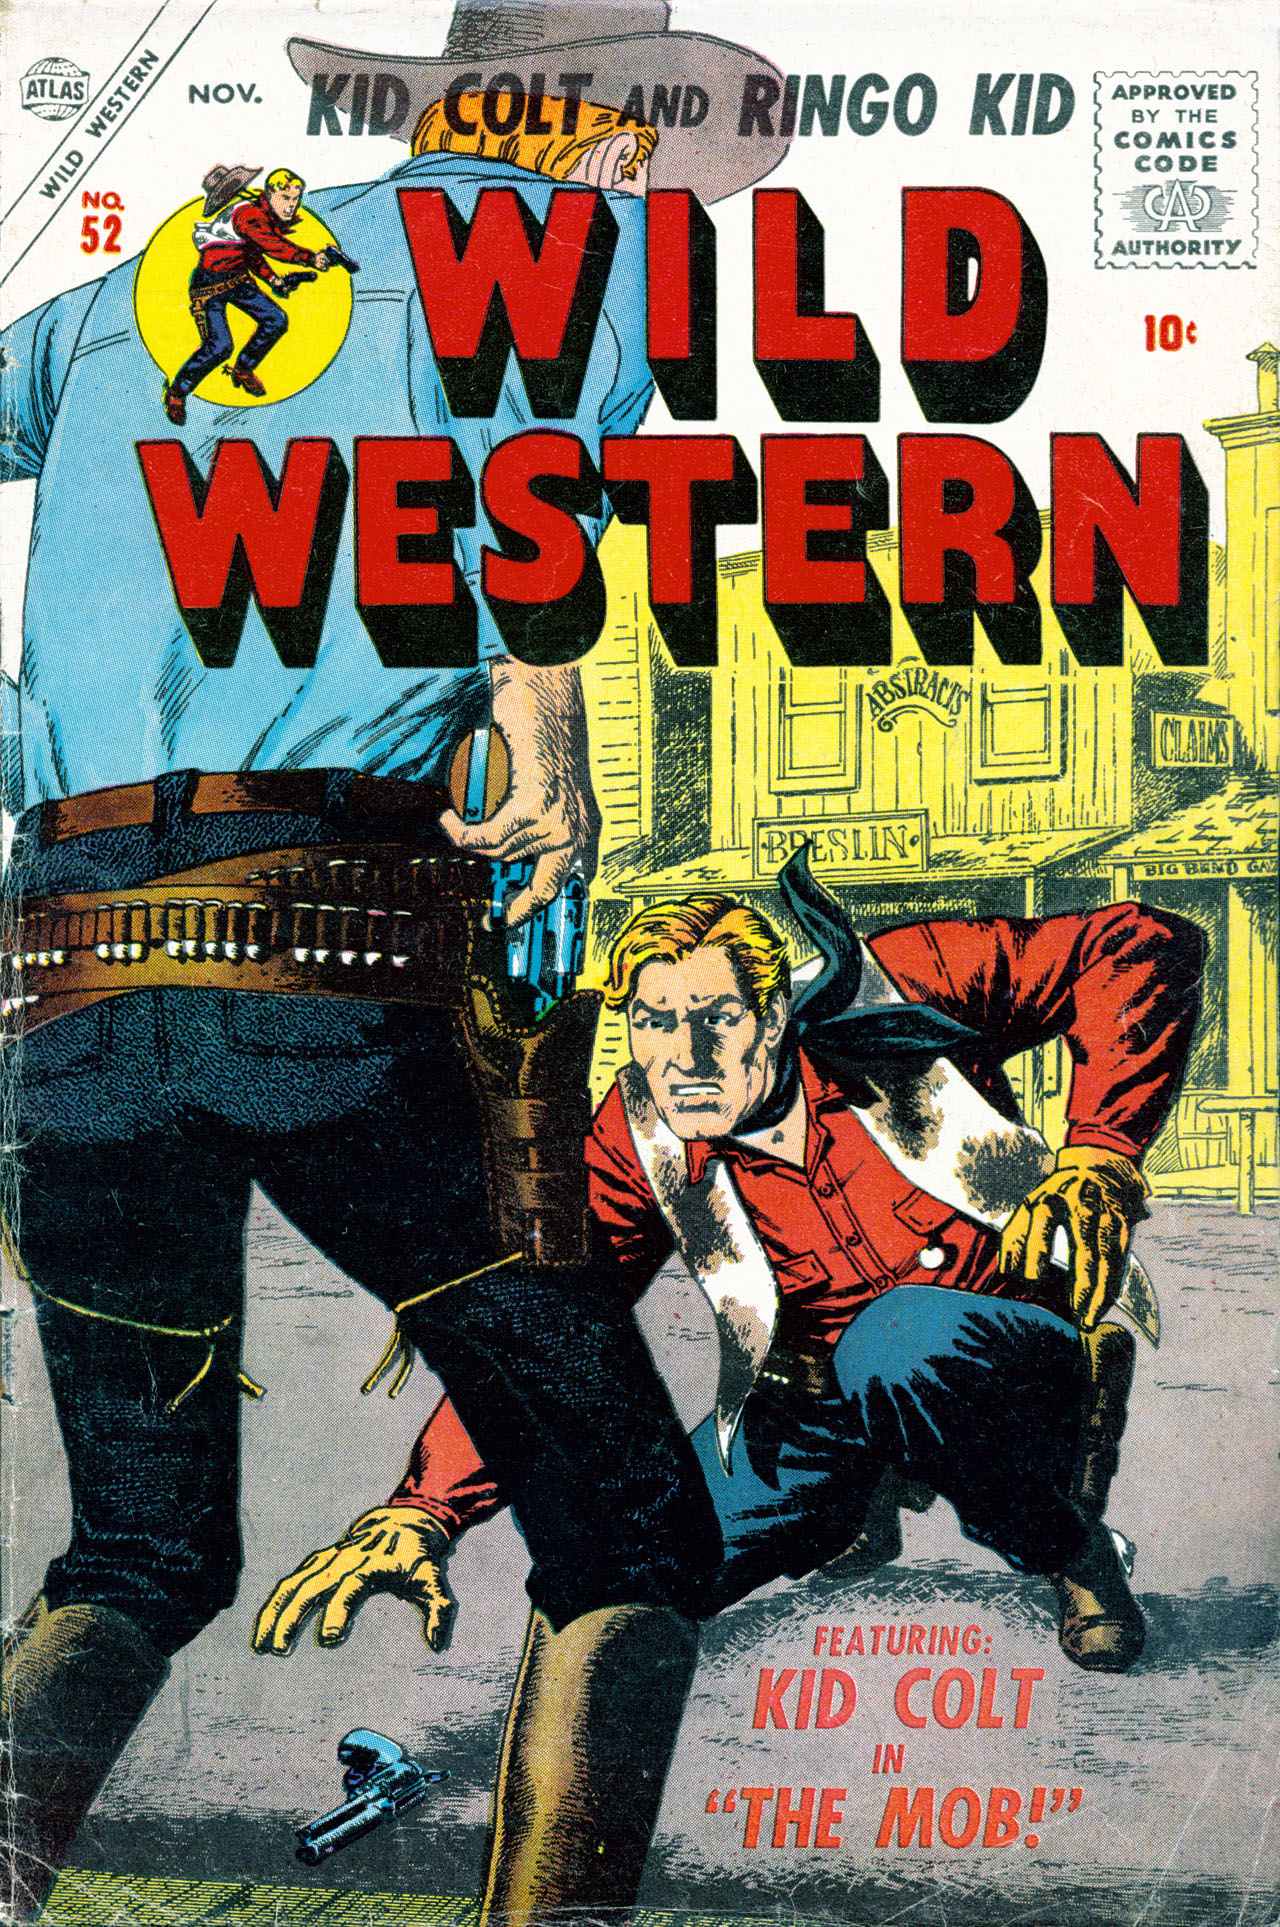 Read online Wild Western comic -  Issue #52 - 1